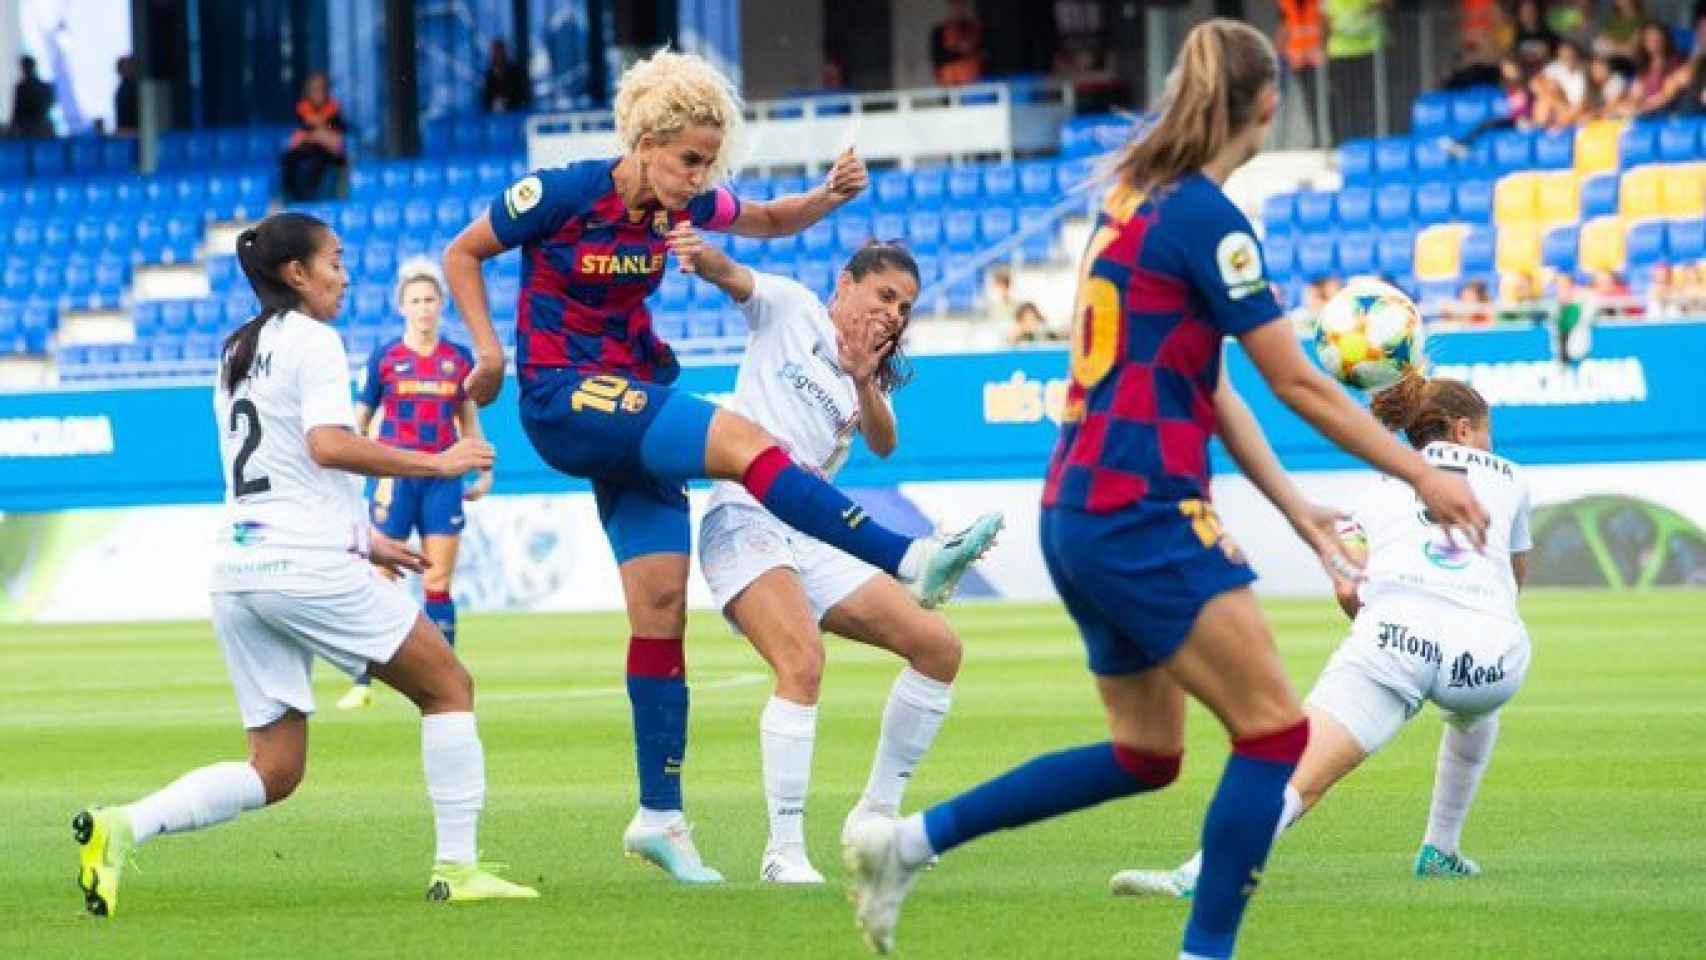 Keira Hamraoui disparando a portería en un partido de la Primera Iberdrola de fútbol femenino / FC Barcelona